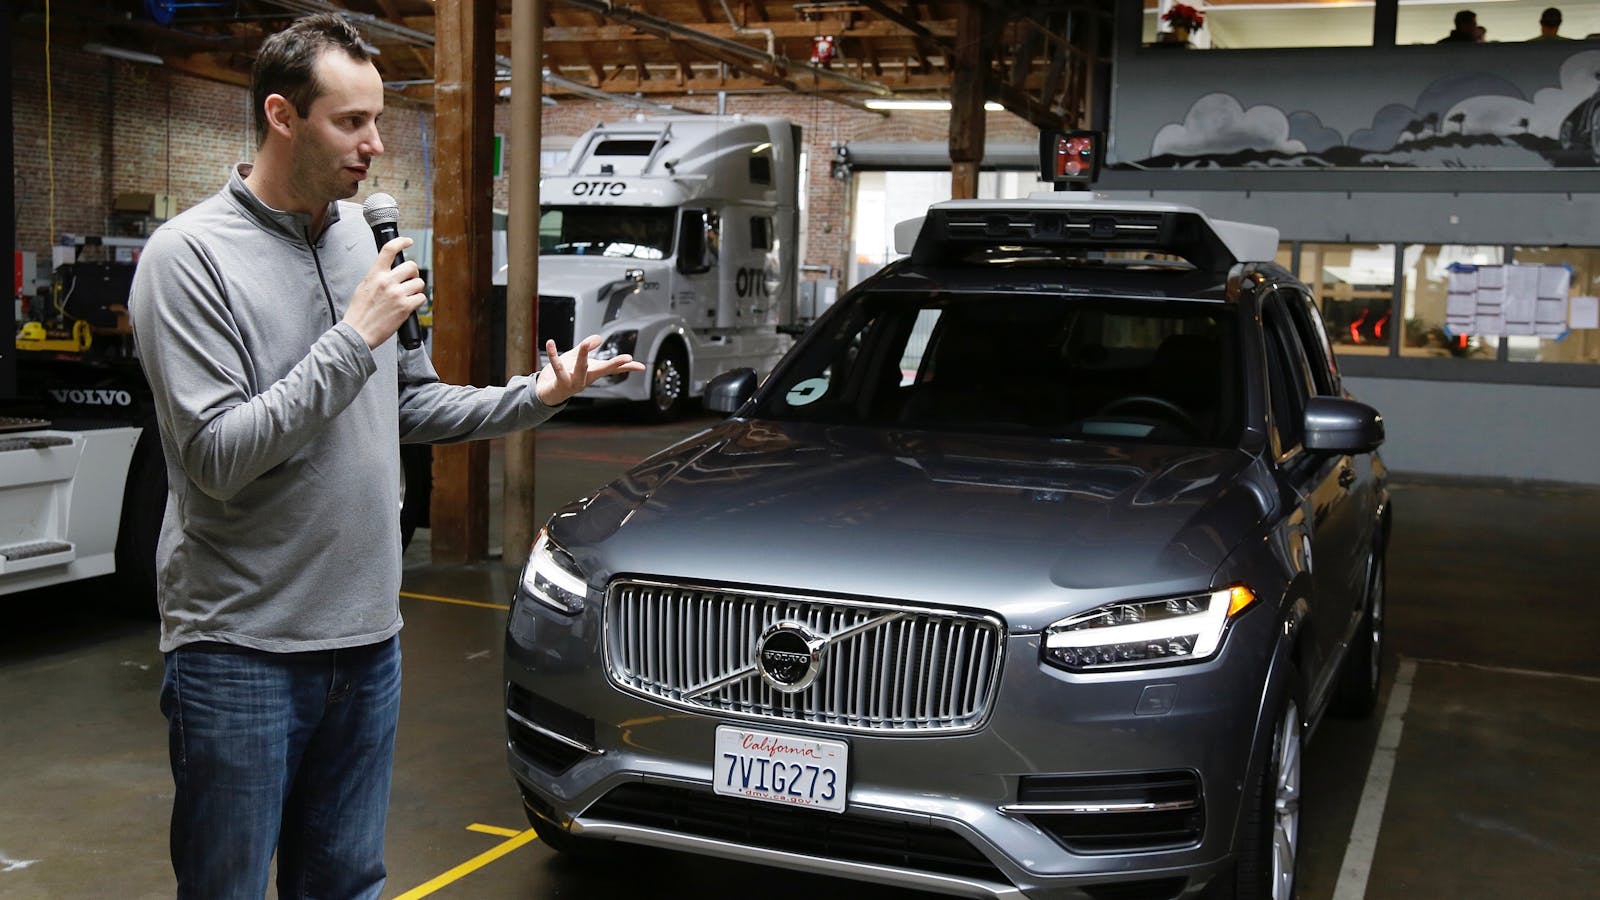 Anthony Levandowski discussing Uber's self-driving car effort last December. Photo by AP.